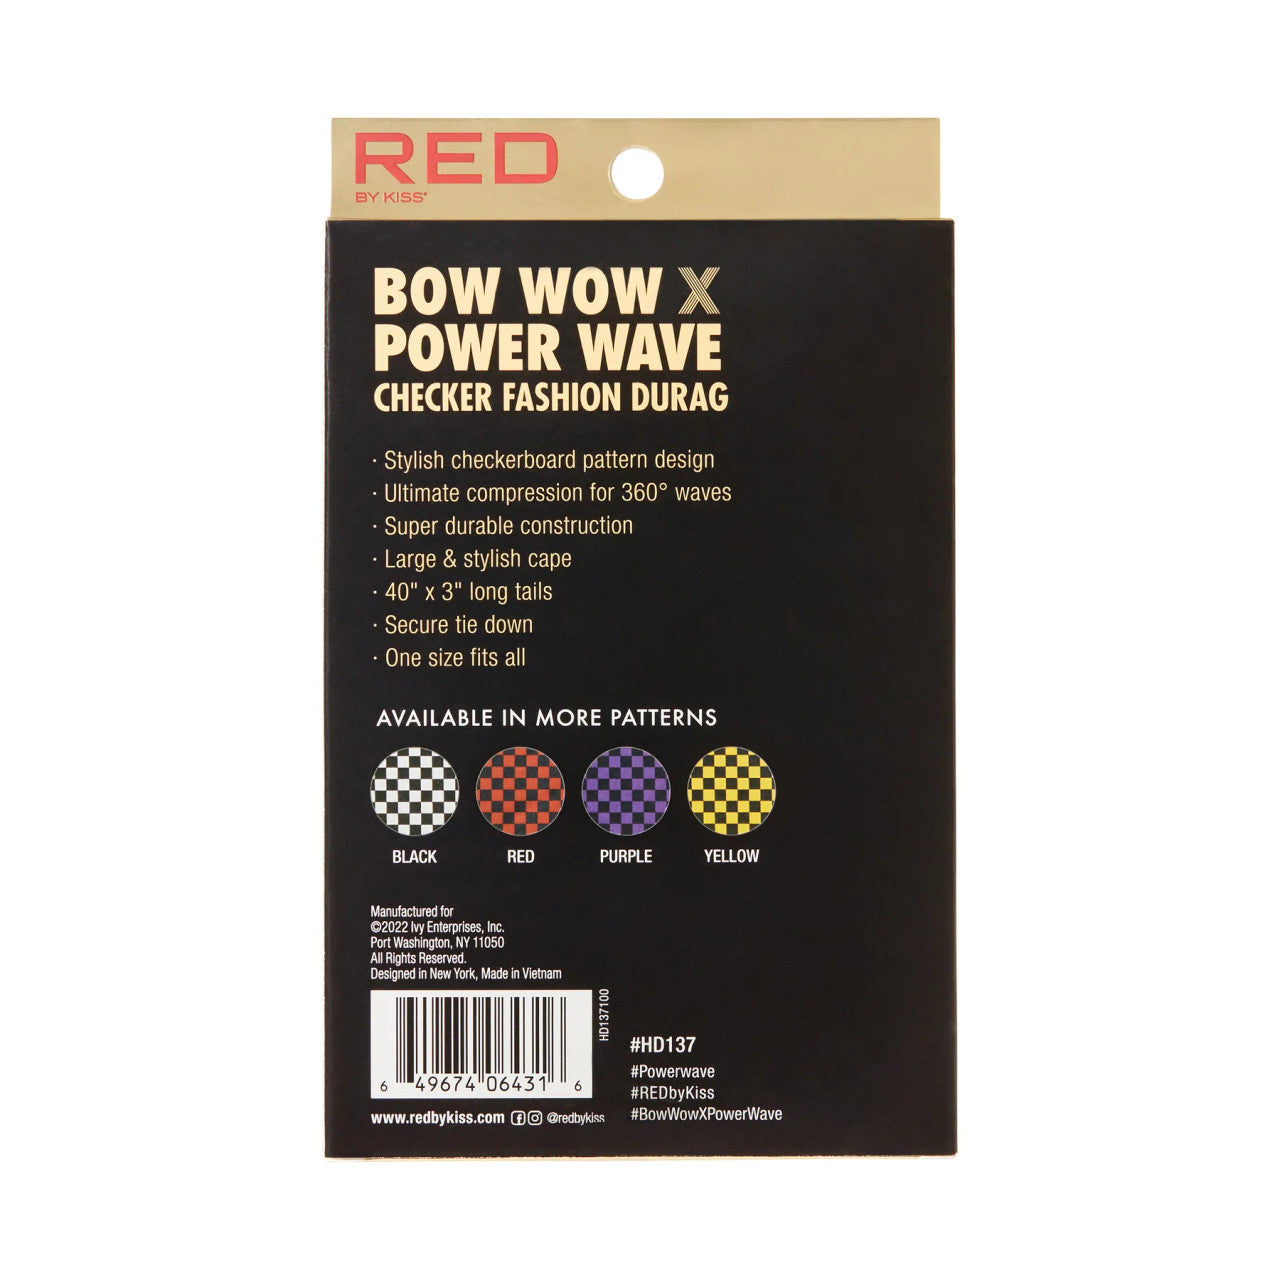 Red by Kiss BOW WOW X Power Wave Checker Fashion Durag - Purple - HD137